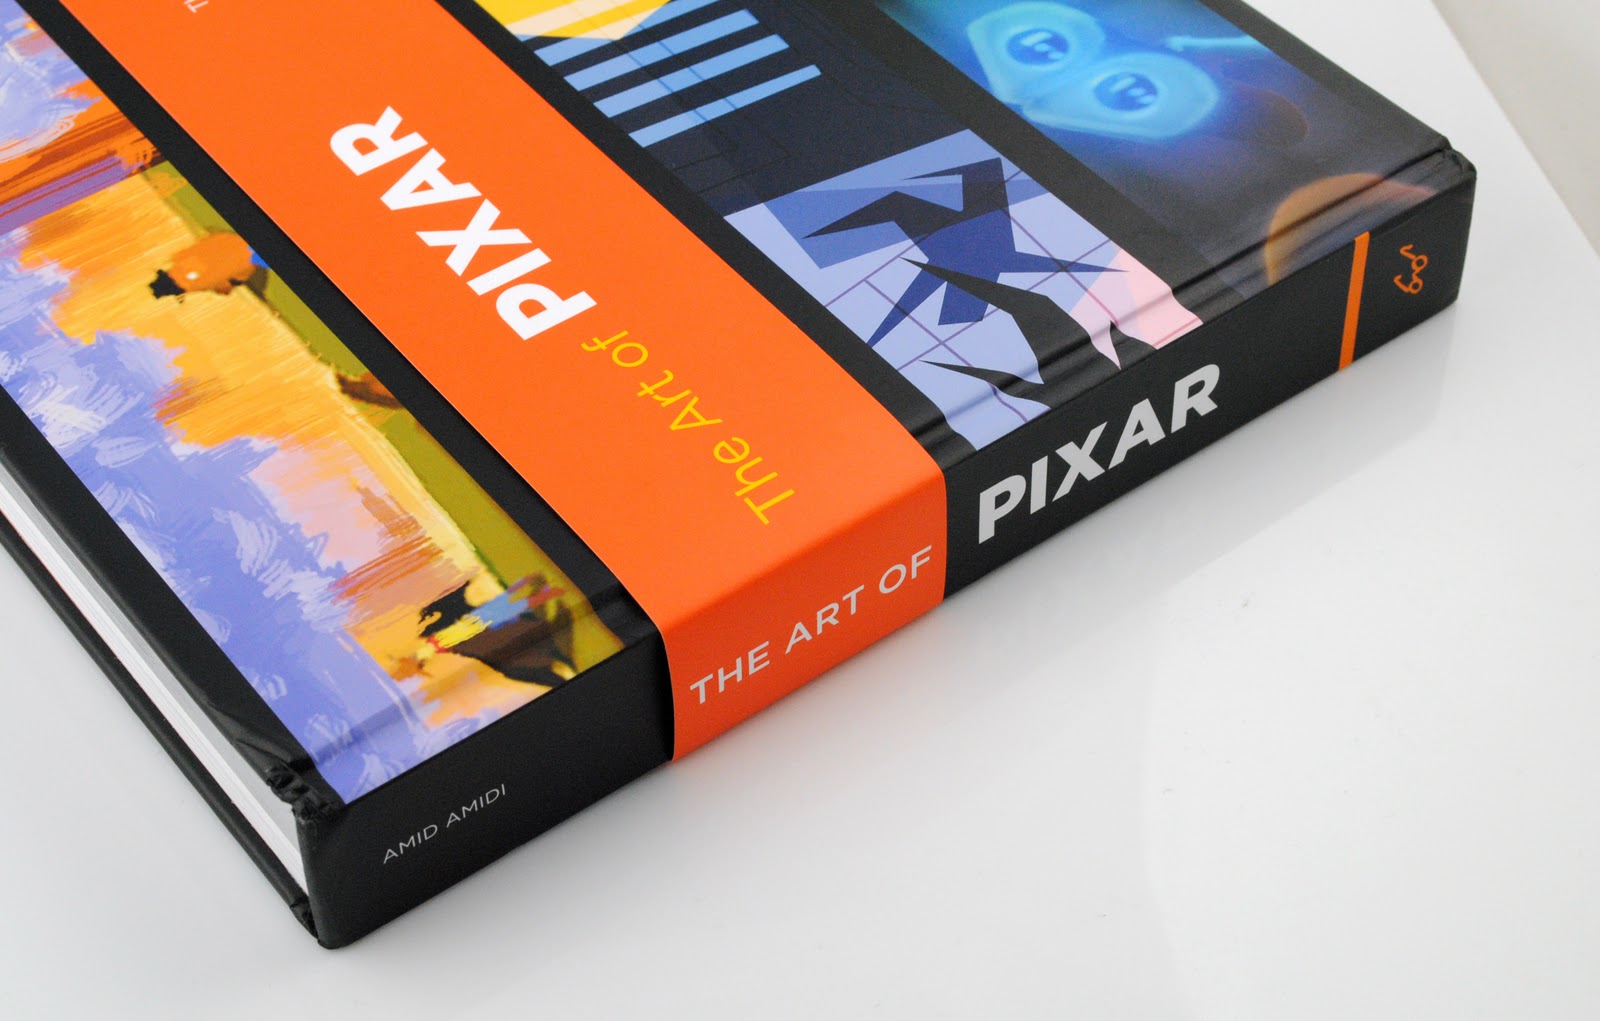 The Art of Pixar by Amid Amidi